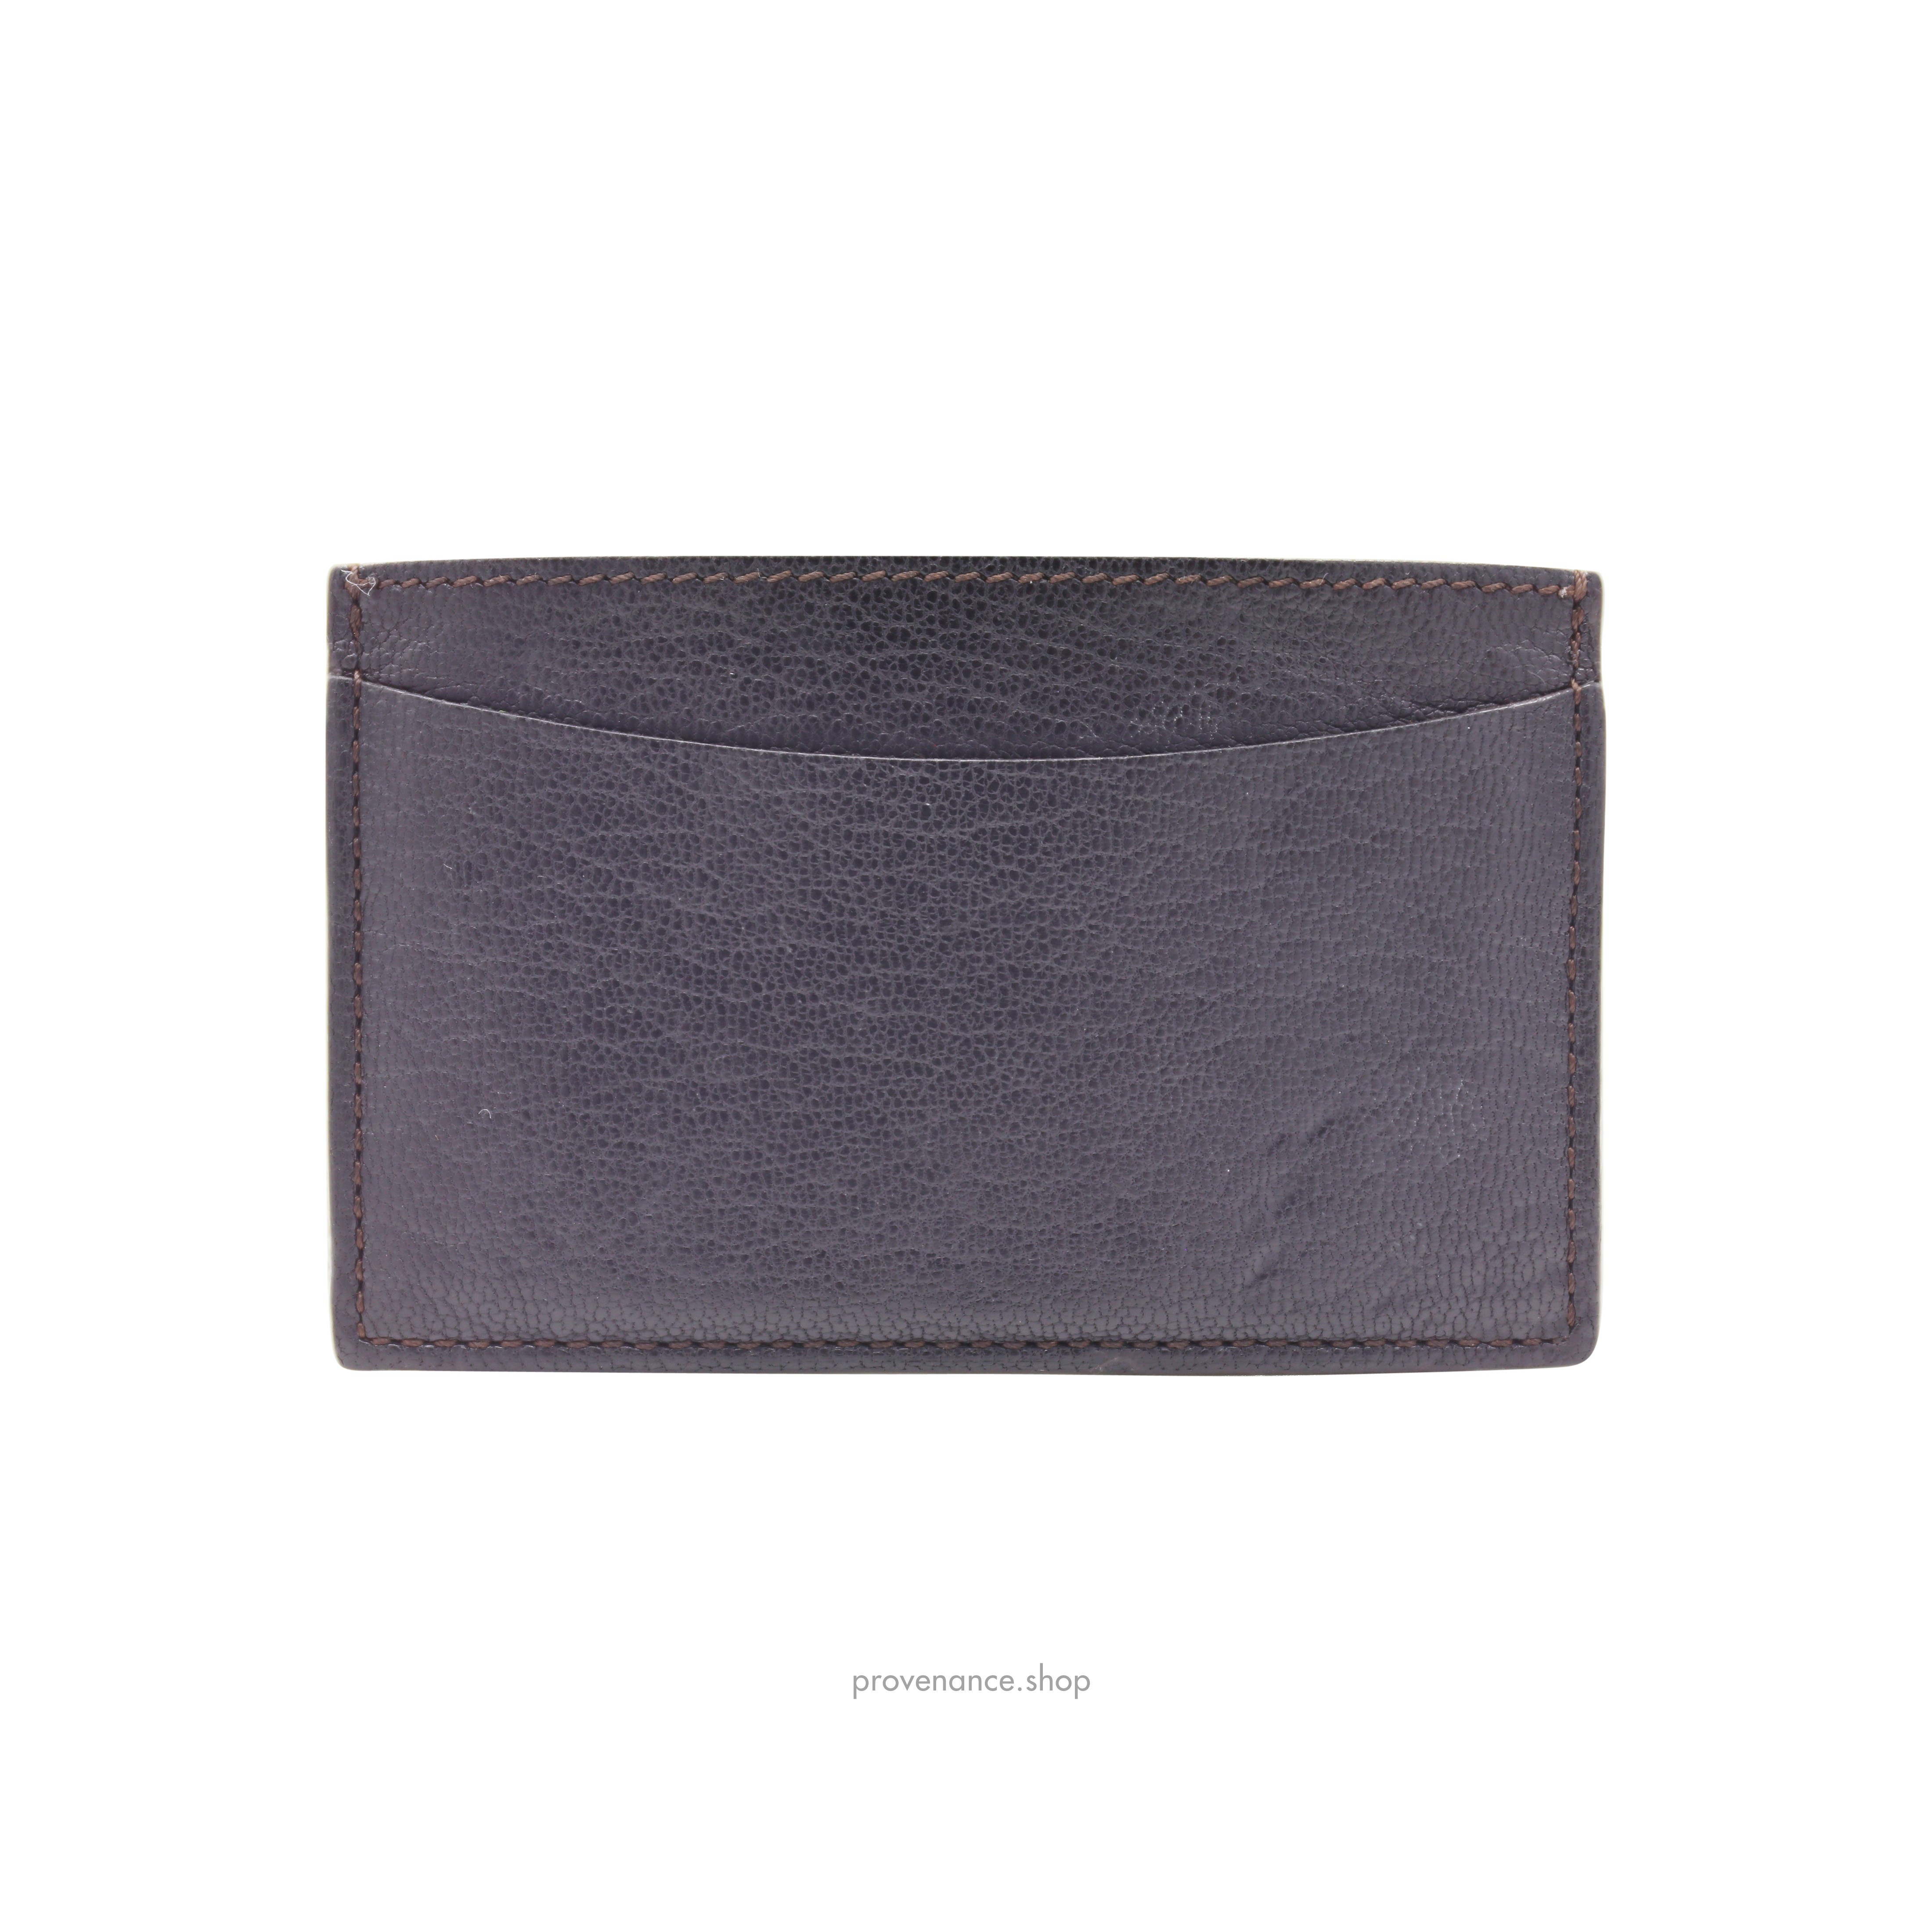 Cartier Card Holder Wallet - Black Chevre Leather - 2